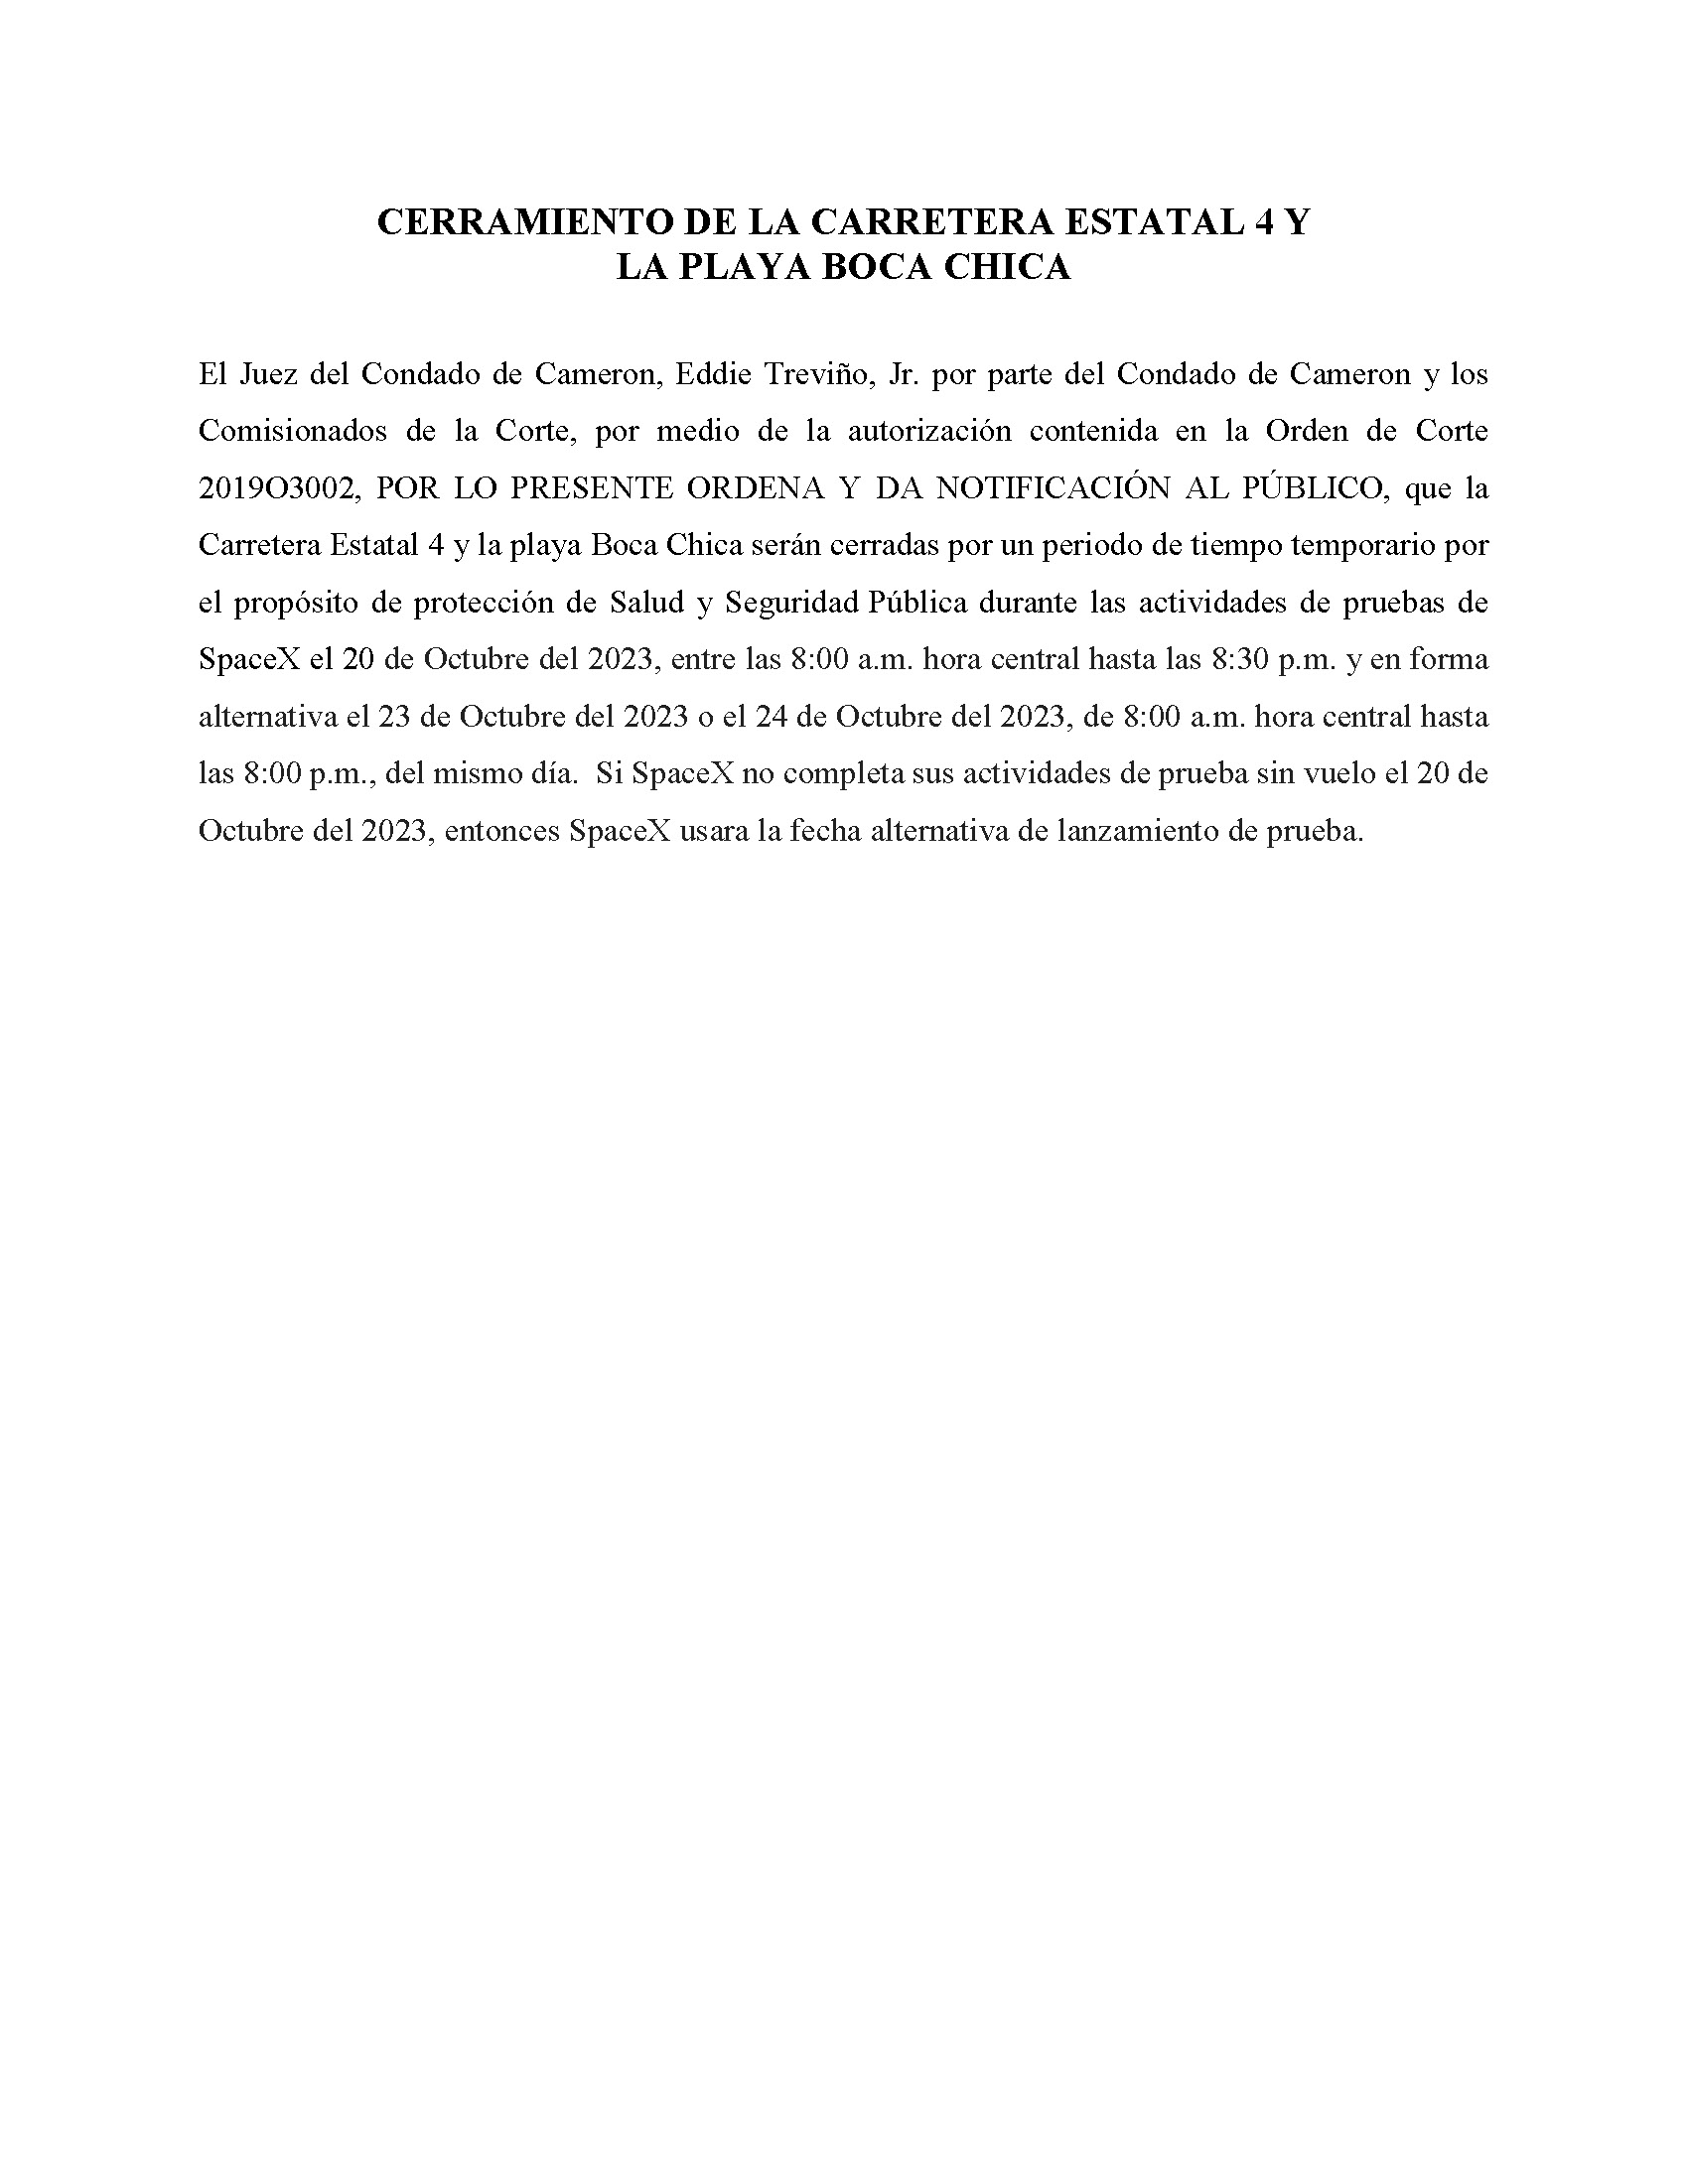 ORDER.CLOSURE OF HIGHWAY 4 Y LA PLAYA BOCA CHICA.SPANISH.10.20.23